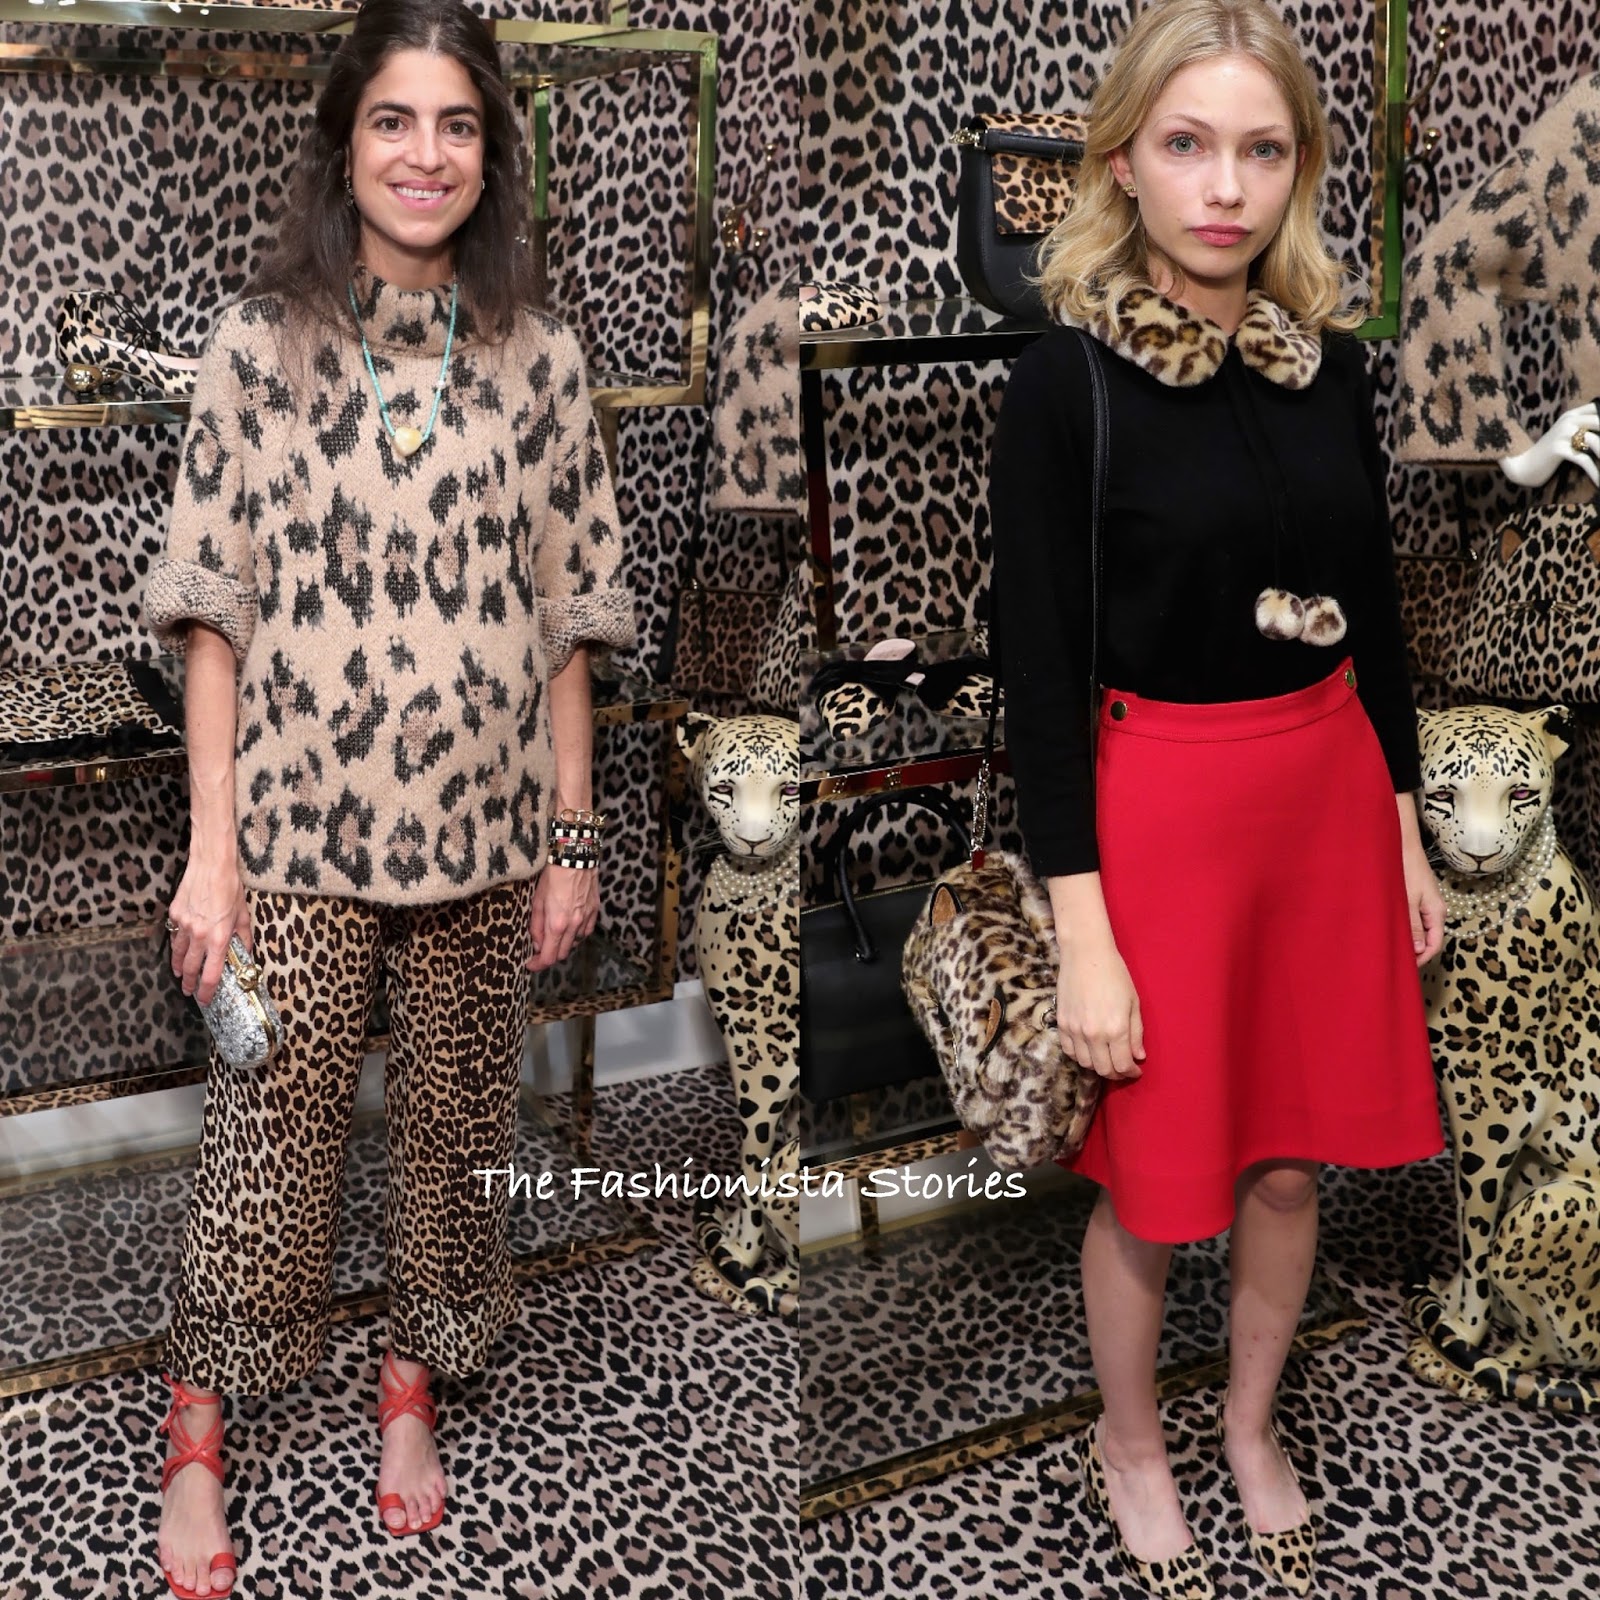 Kate Spade New York & Man Repeller 'Leopard Leopard Leopard' Pop-Up Shop